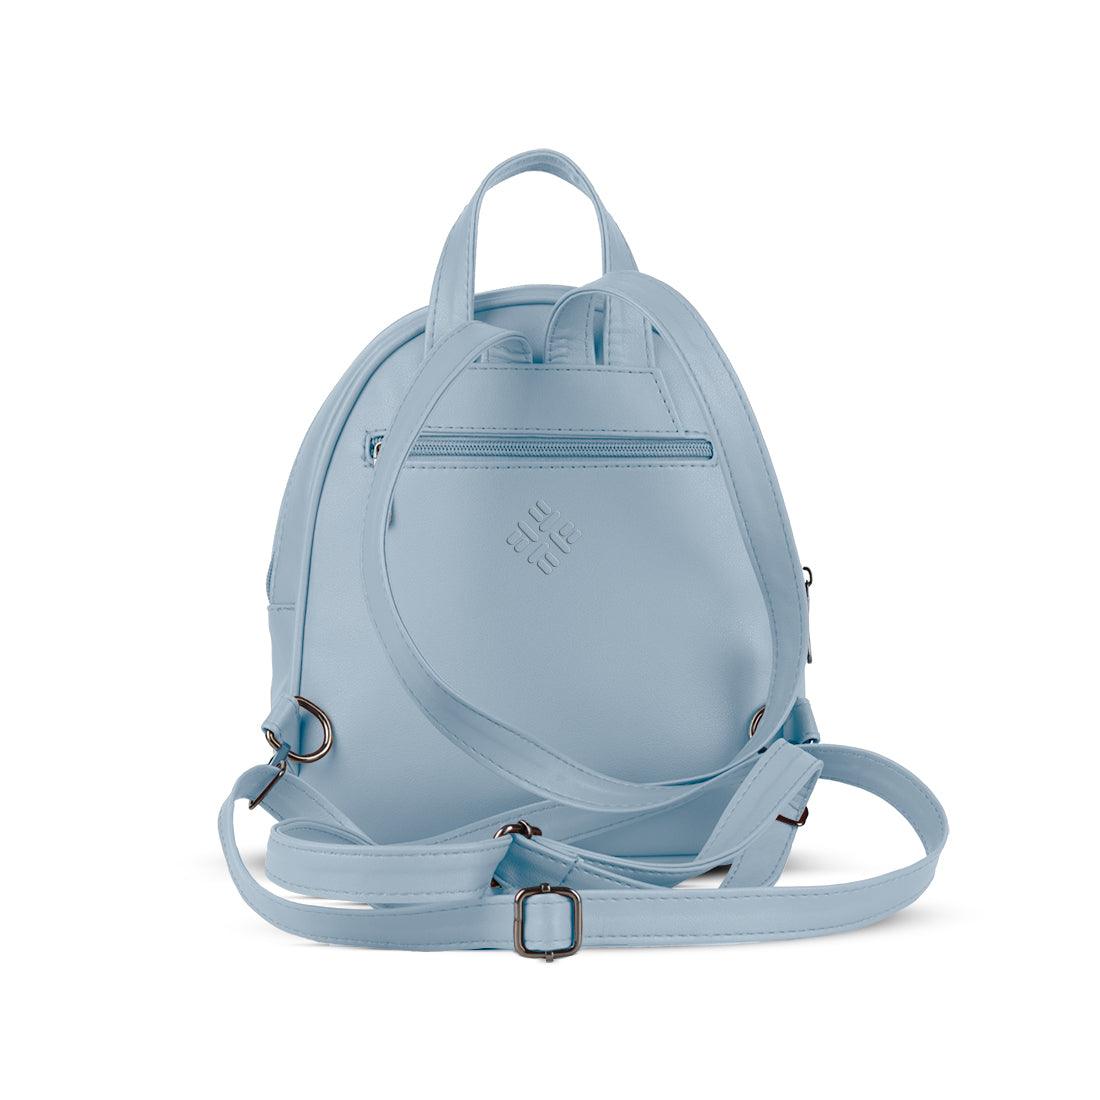 Blue O Mini Backpacks Rainbow triangles - CANVAEGYPT